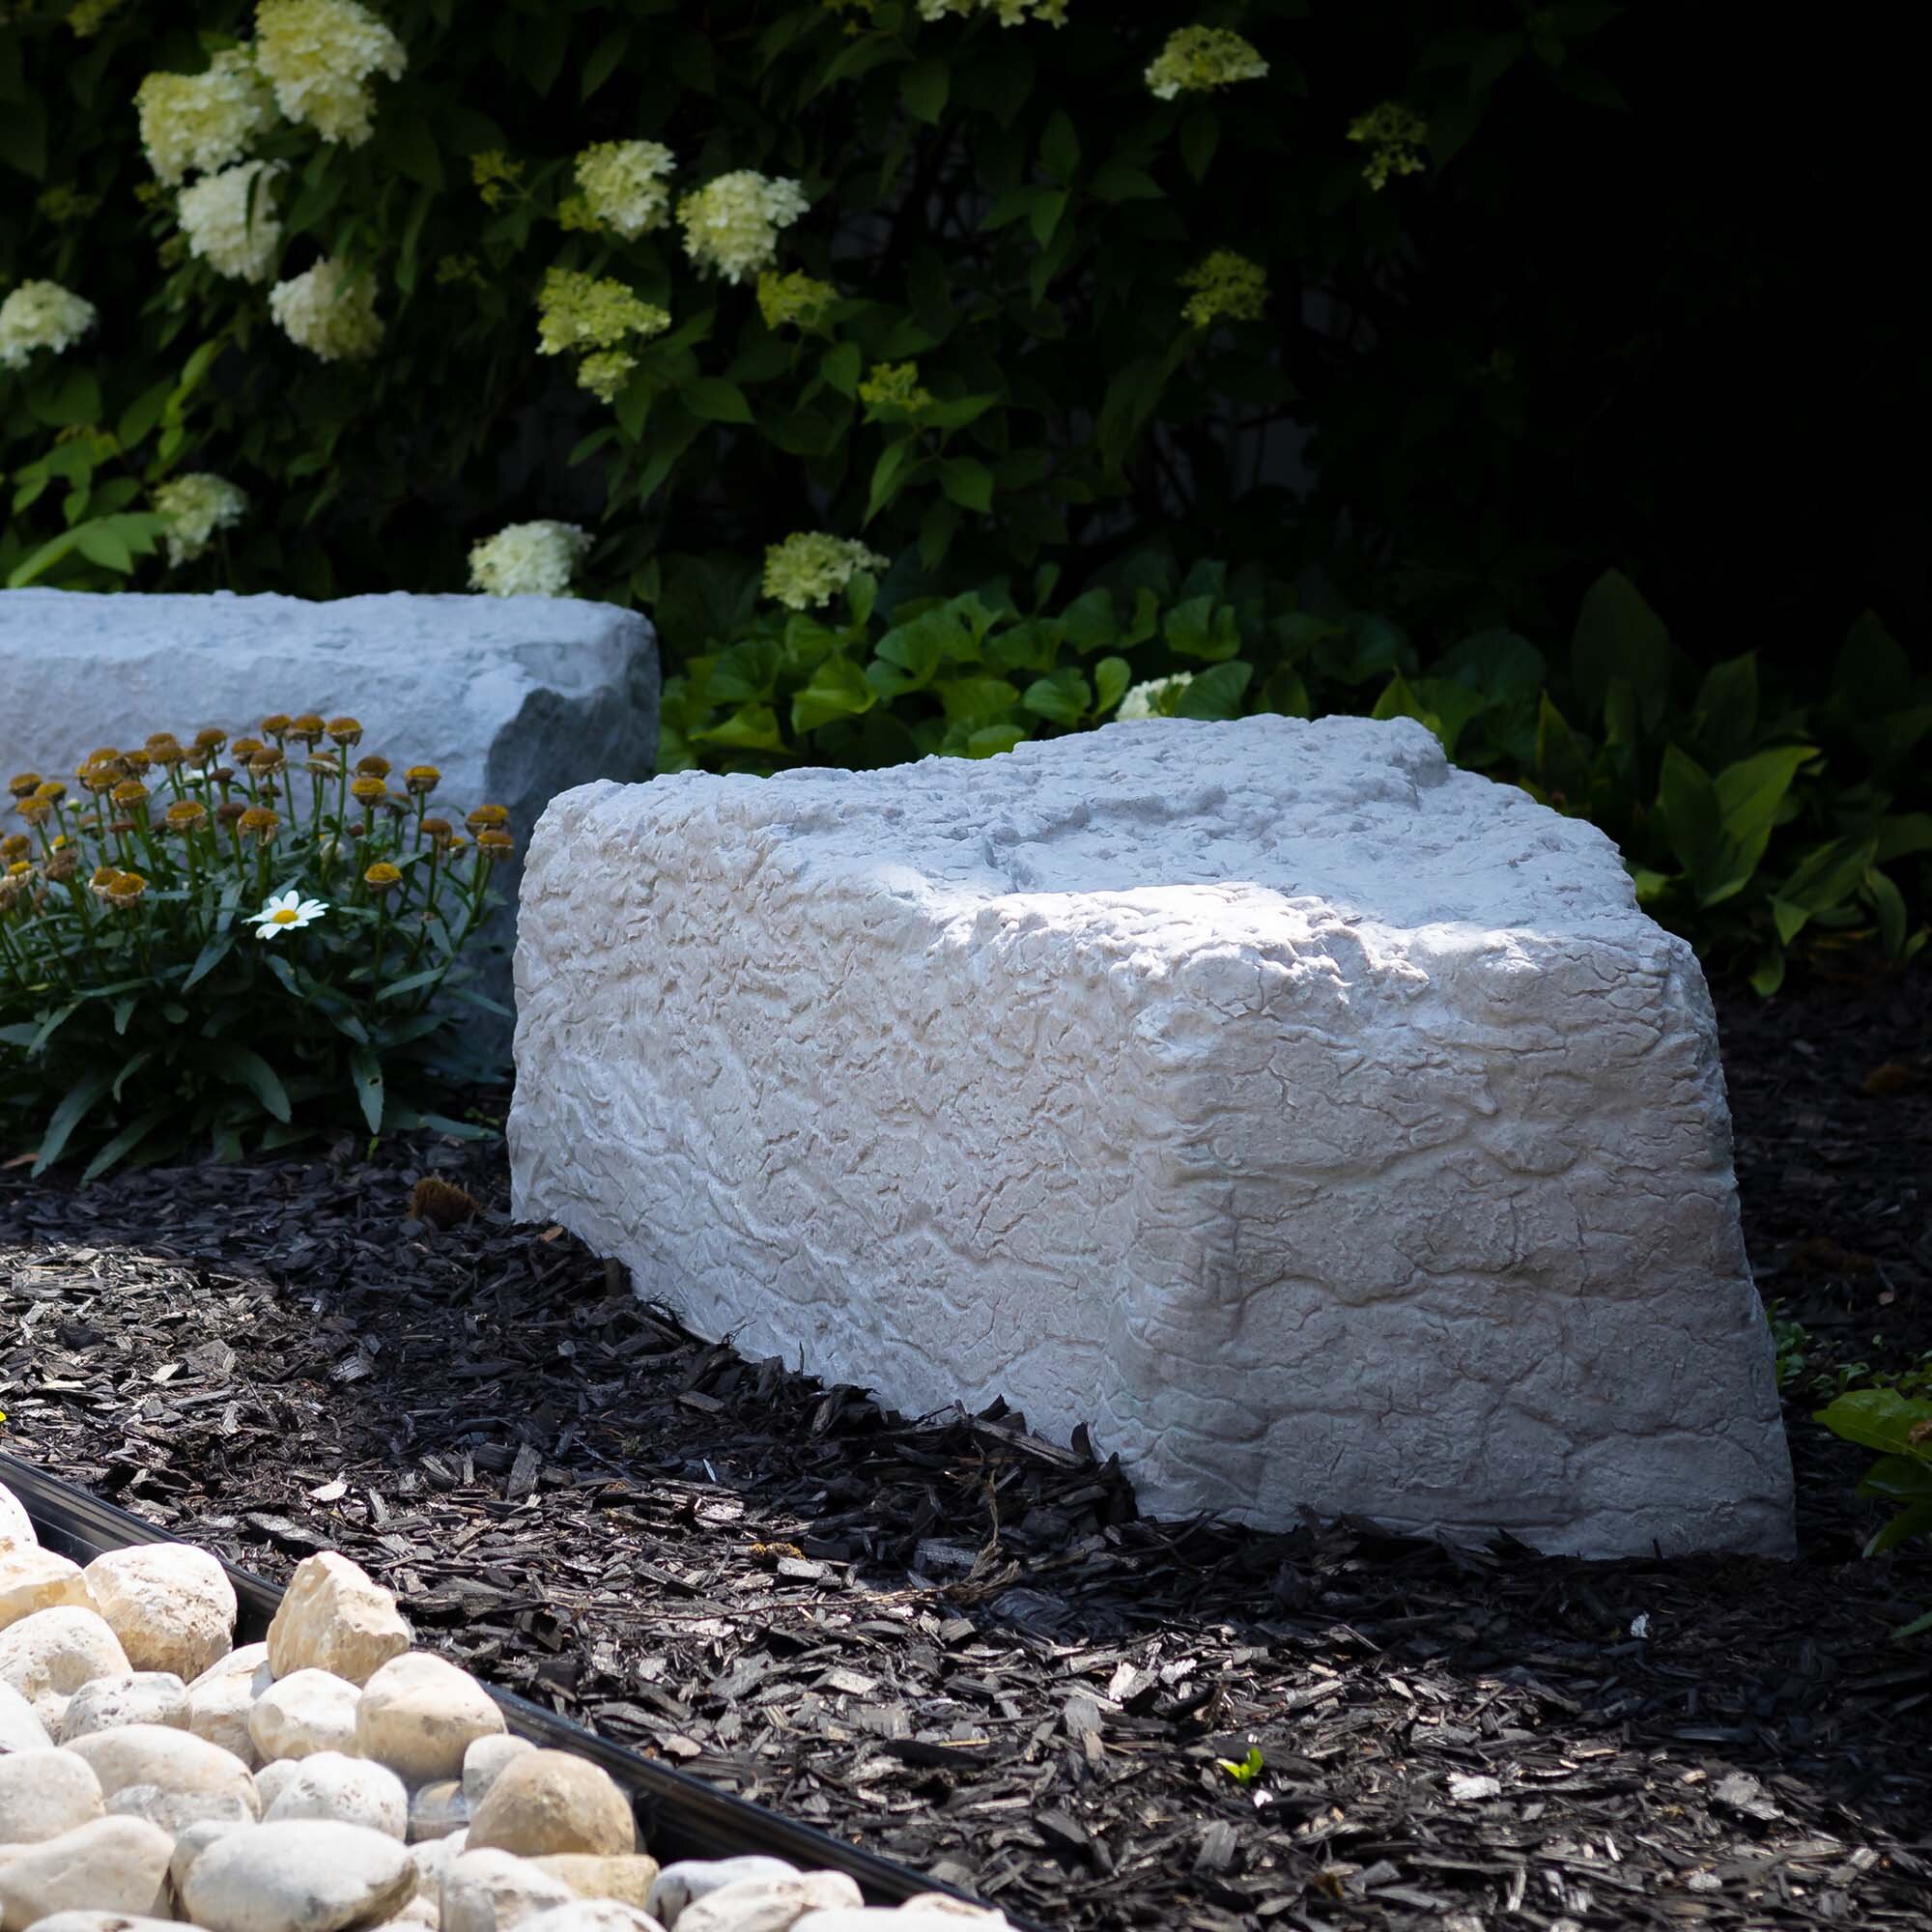 garden stone texture